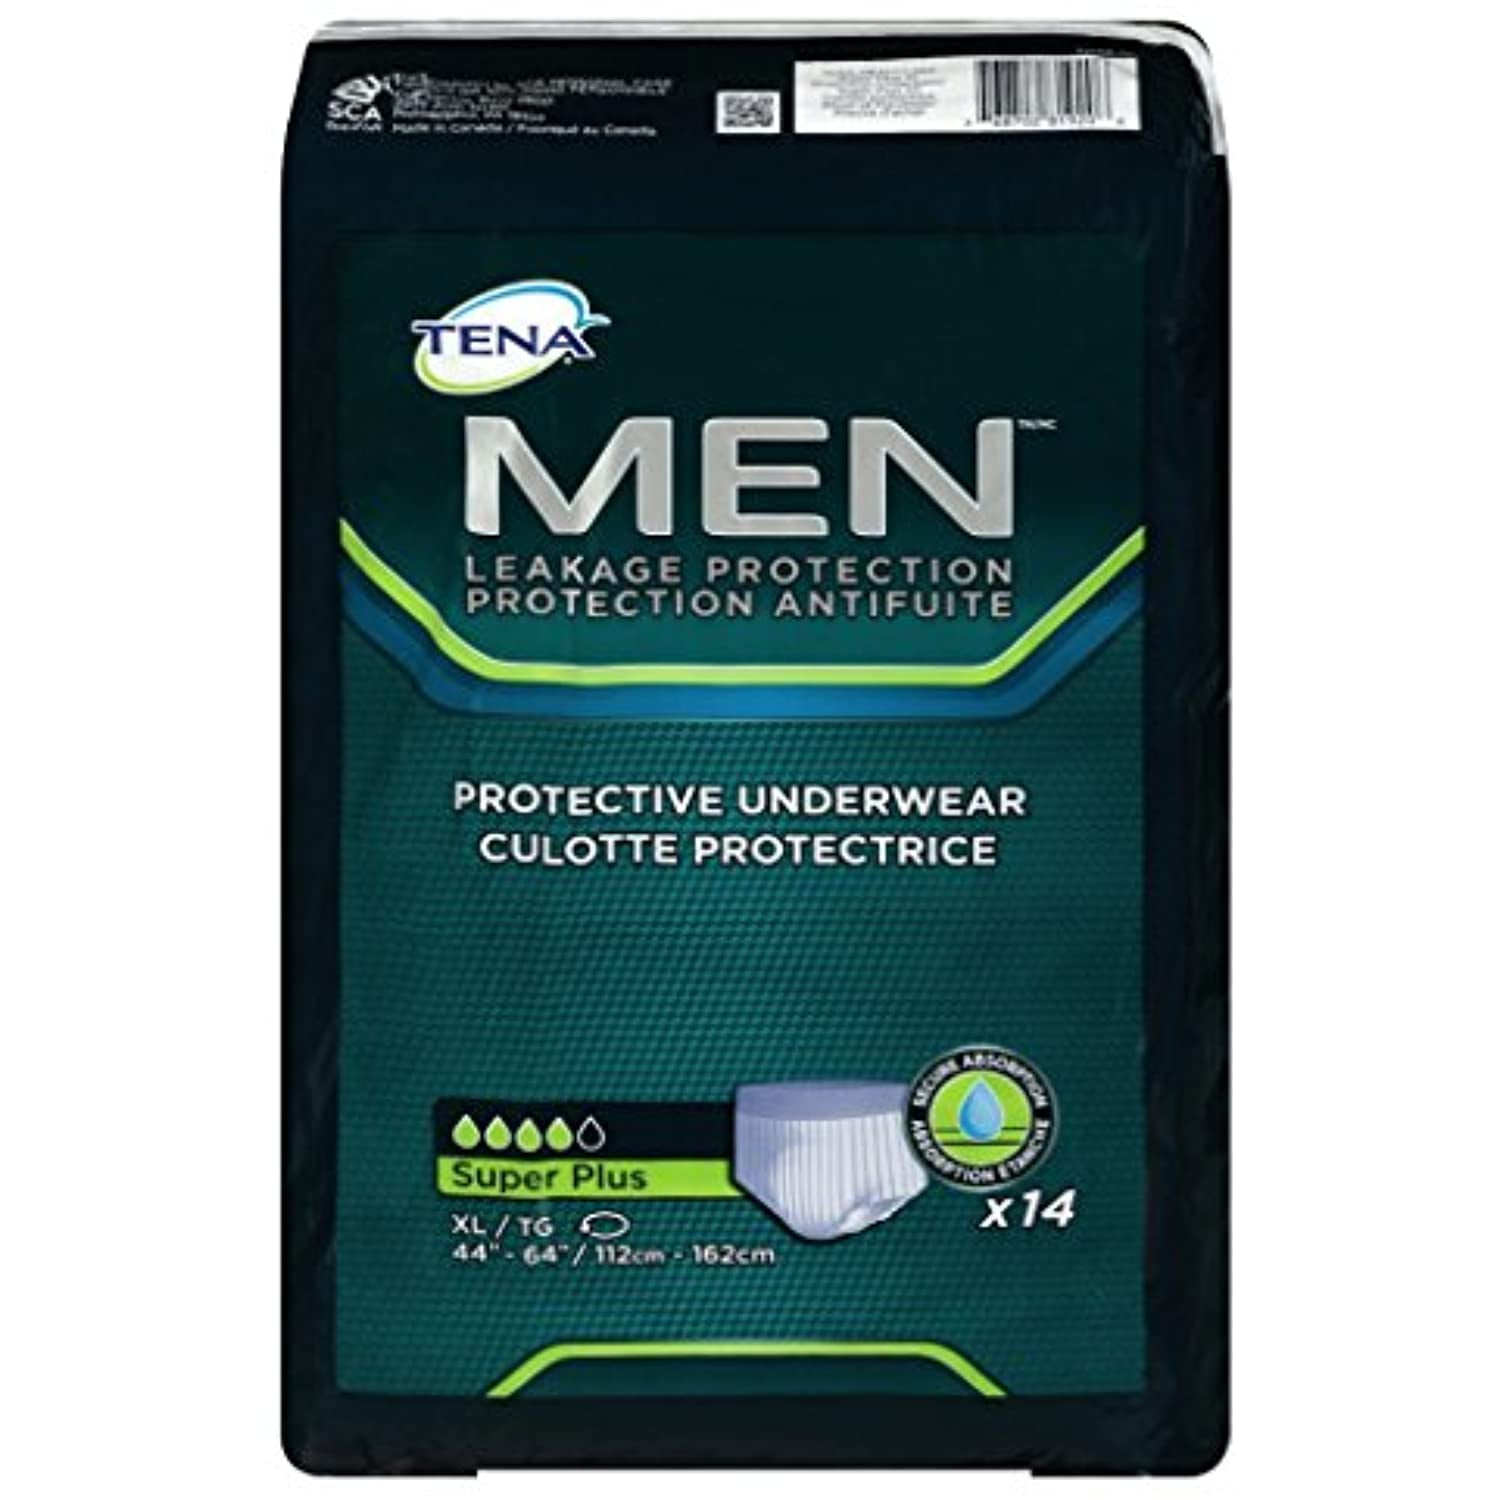 TENA Disposable Underwear Male X-Large, 81920, 14 Ct - Walmart.com